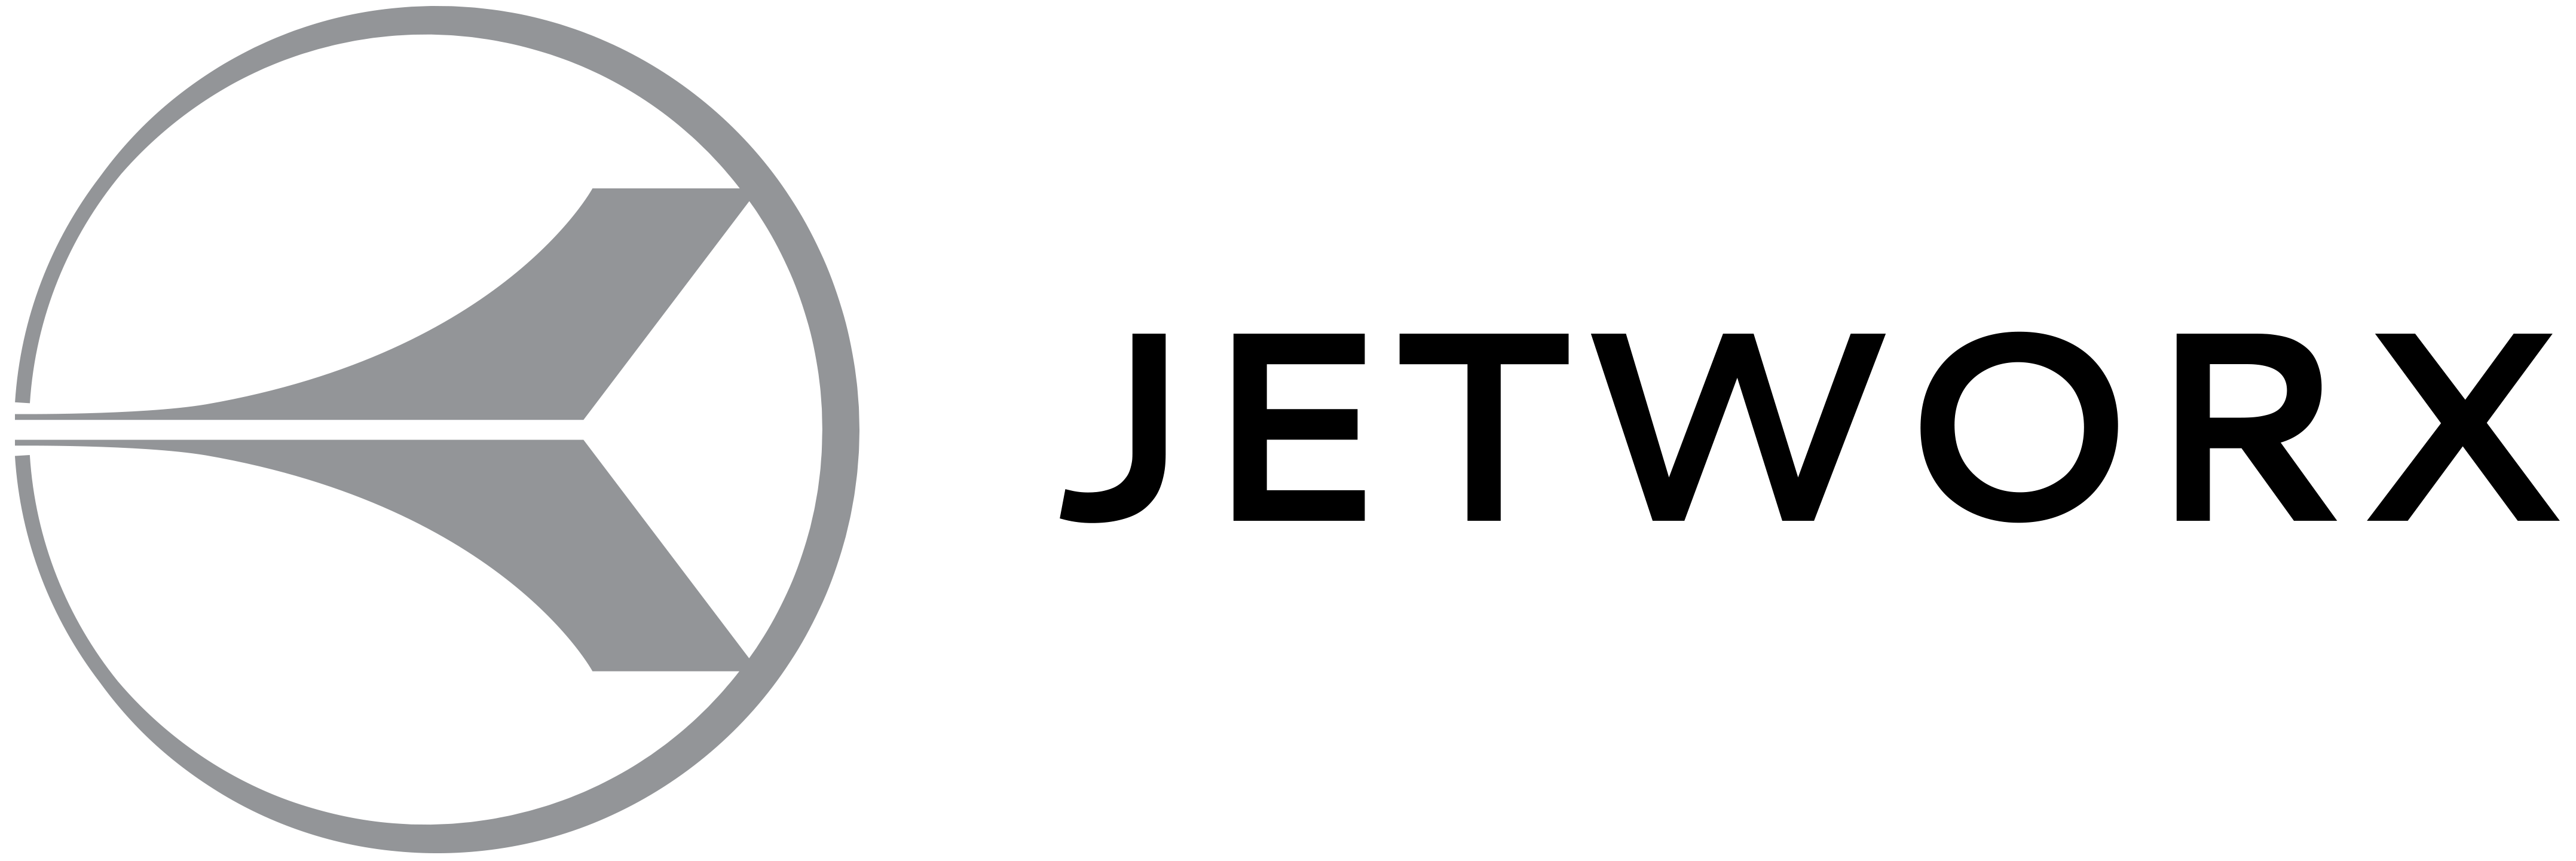 Aircraft Maintenance Logo - JetWorx